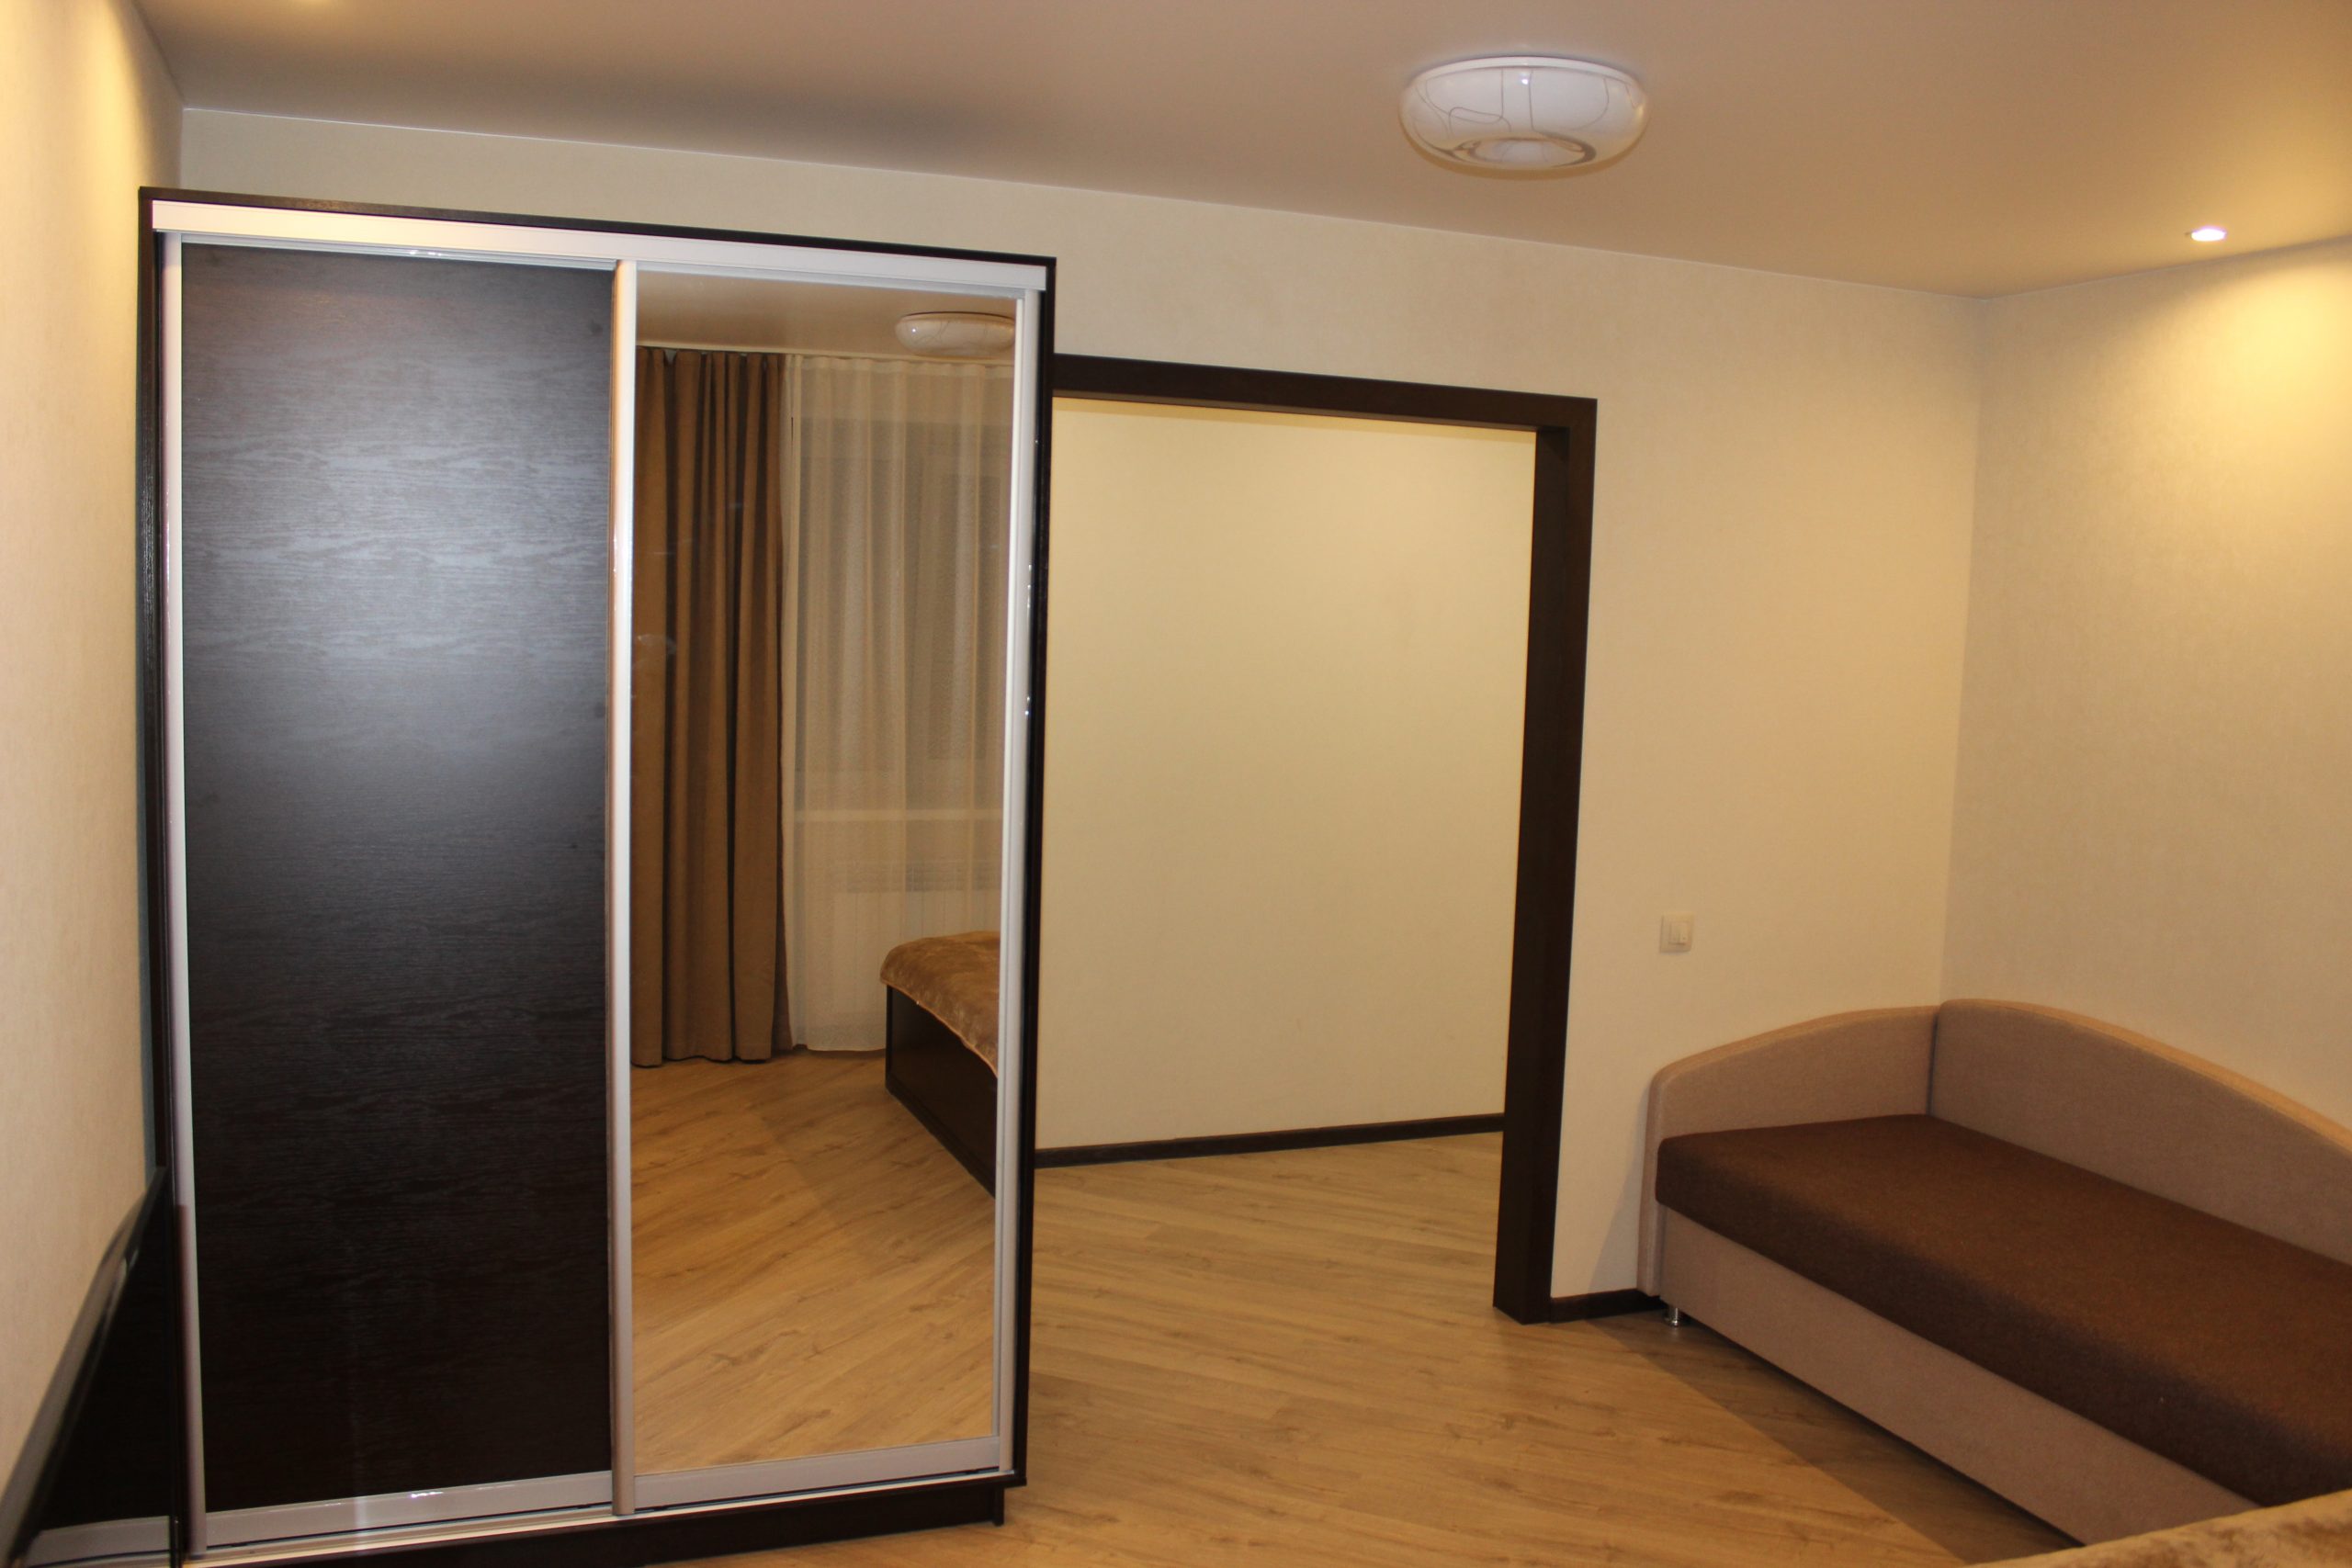 Однокомнатная квартира на ул. Косарева 33 (38кв.м) до 3 гостей